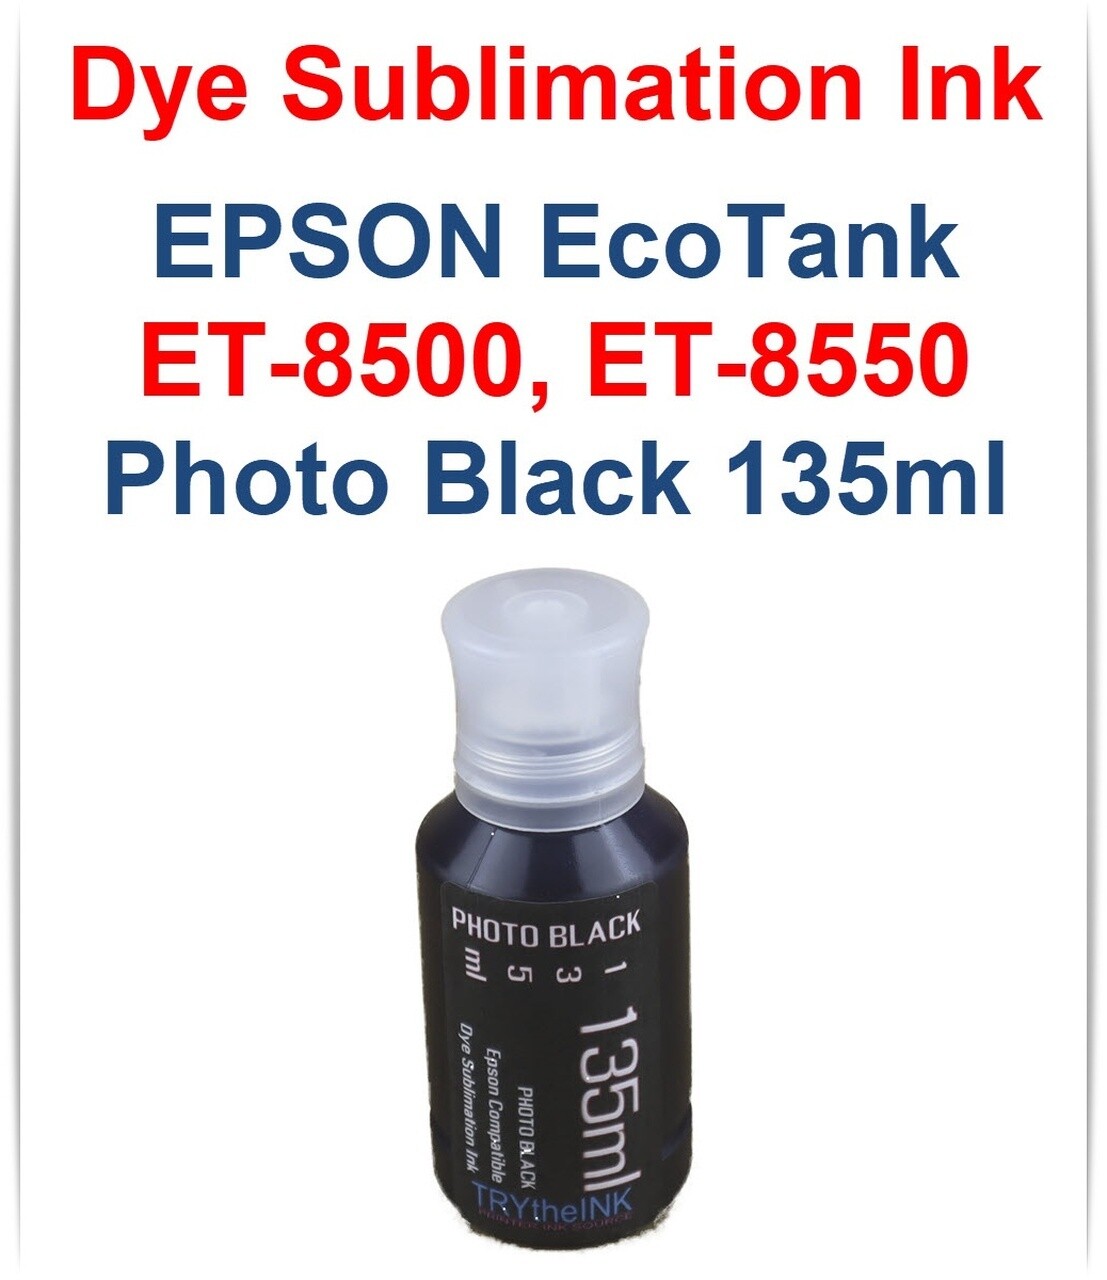 Photo Black Dye Sublimation Ink 135ml bottle for EPSON EcoTank ET-8500 ET-8550 printers